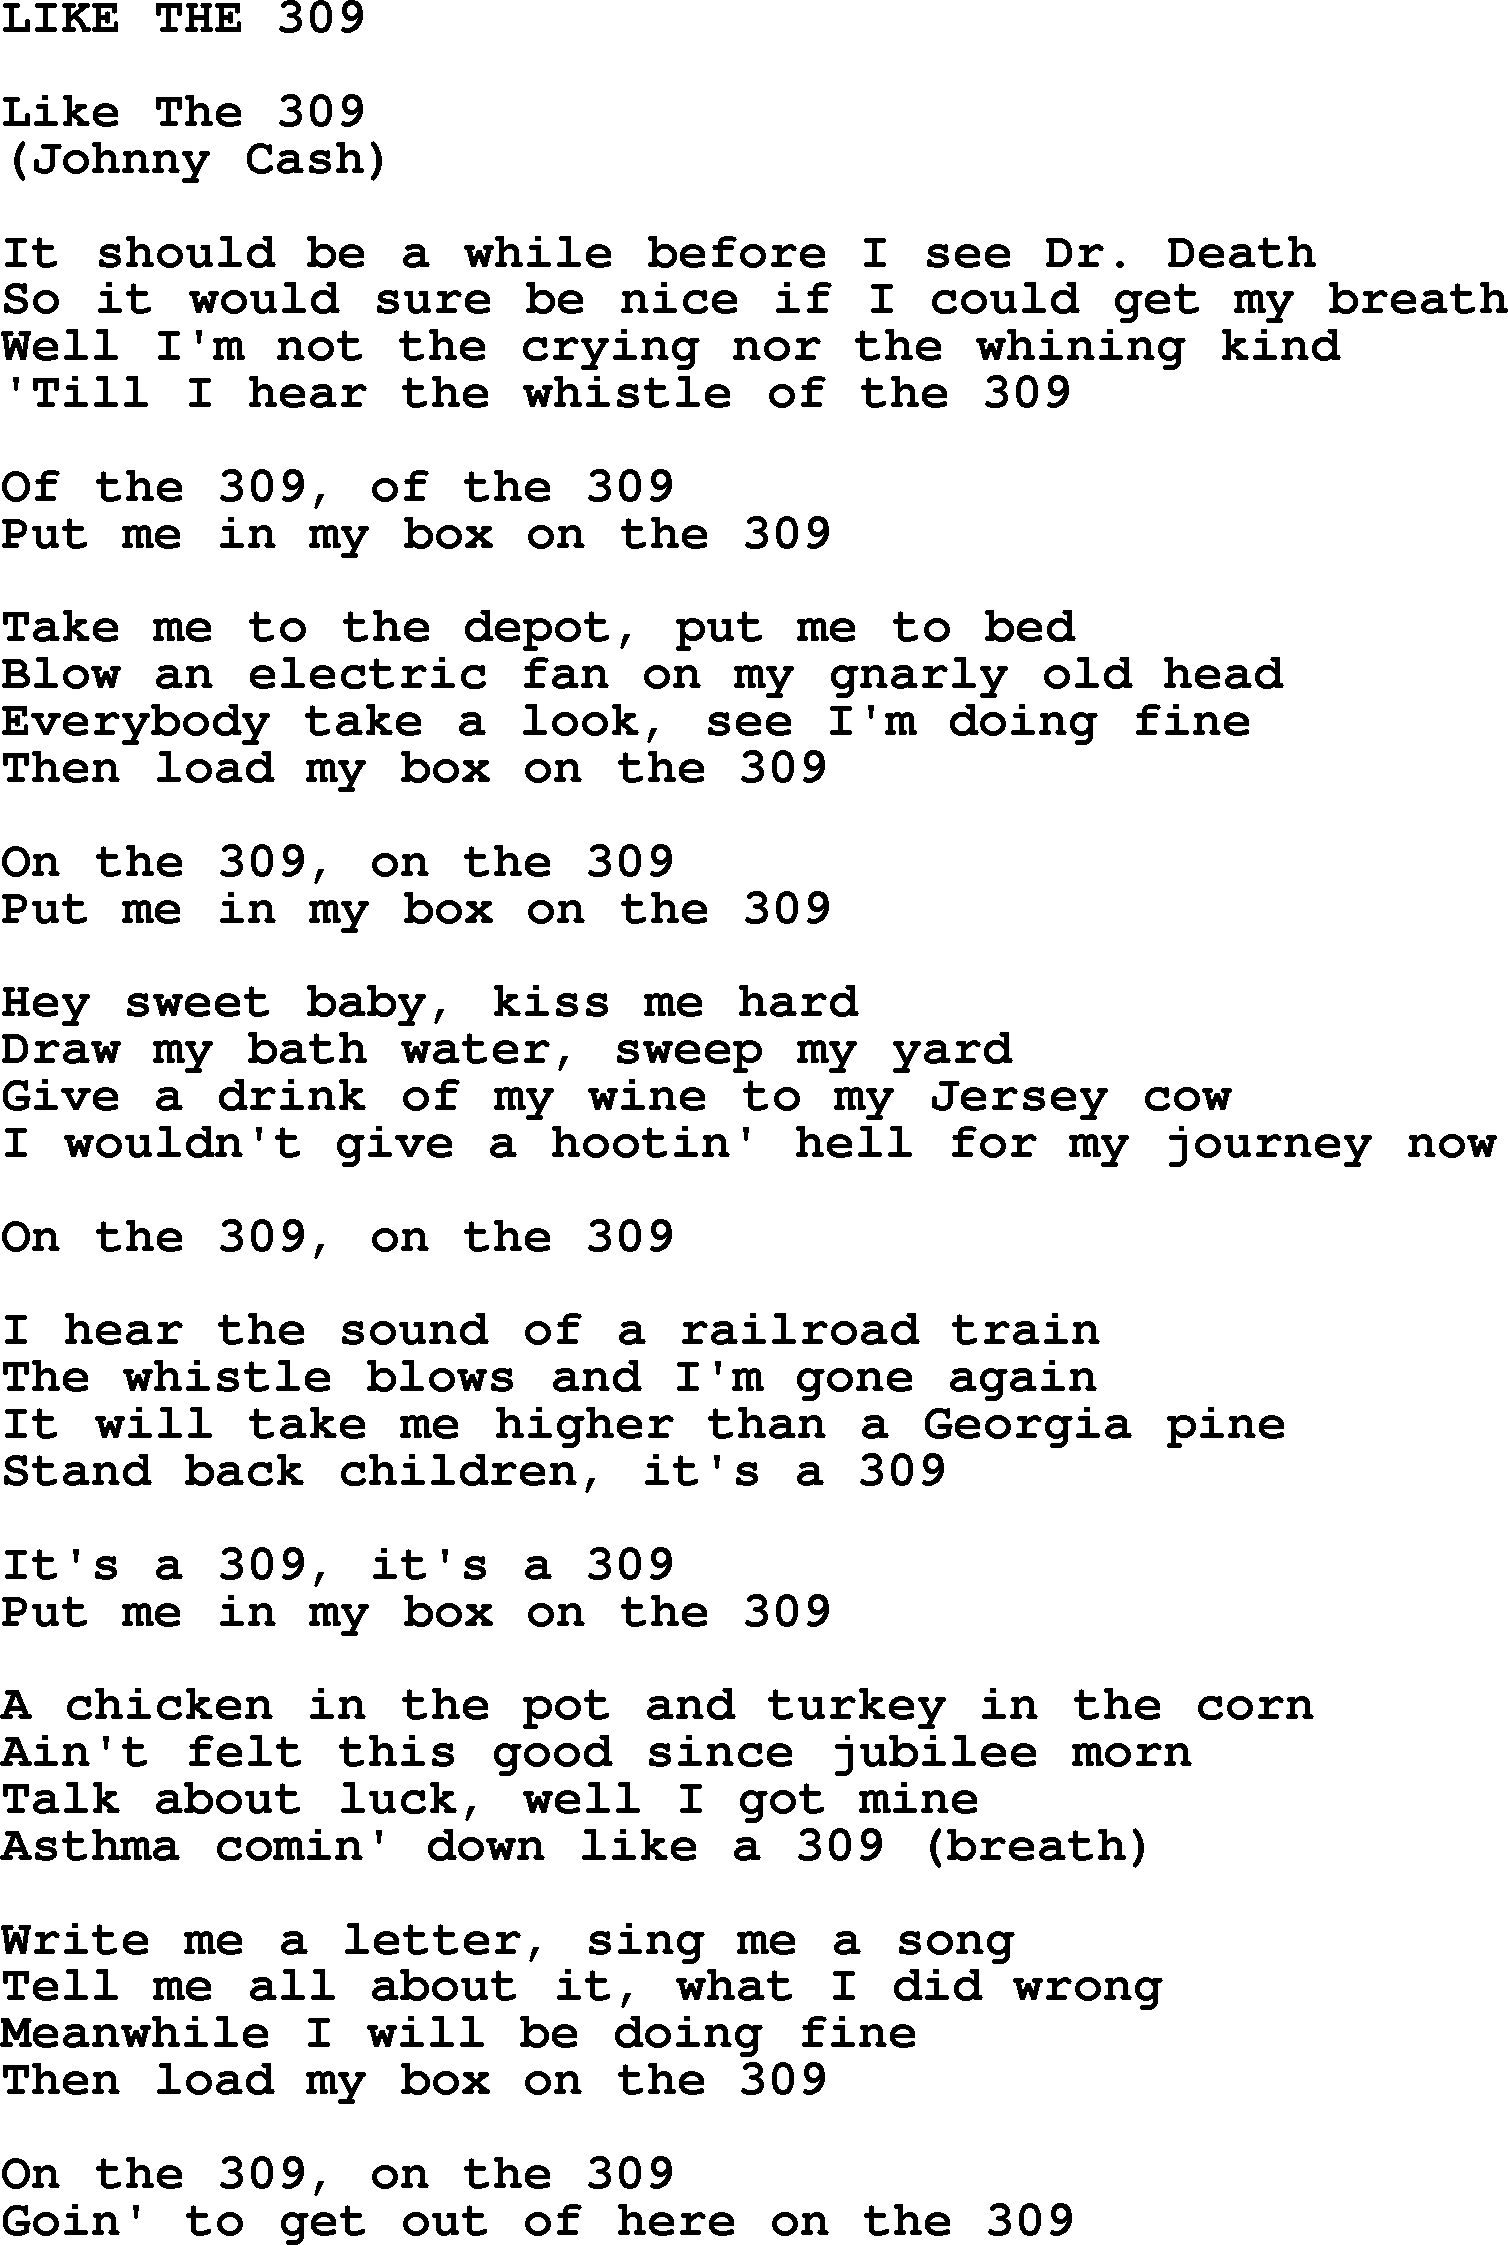 Johnny Cash song Like The 309.txt lyrics